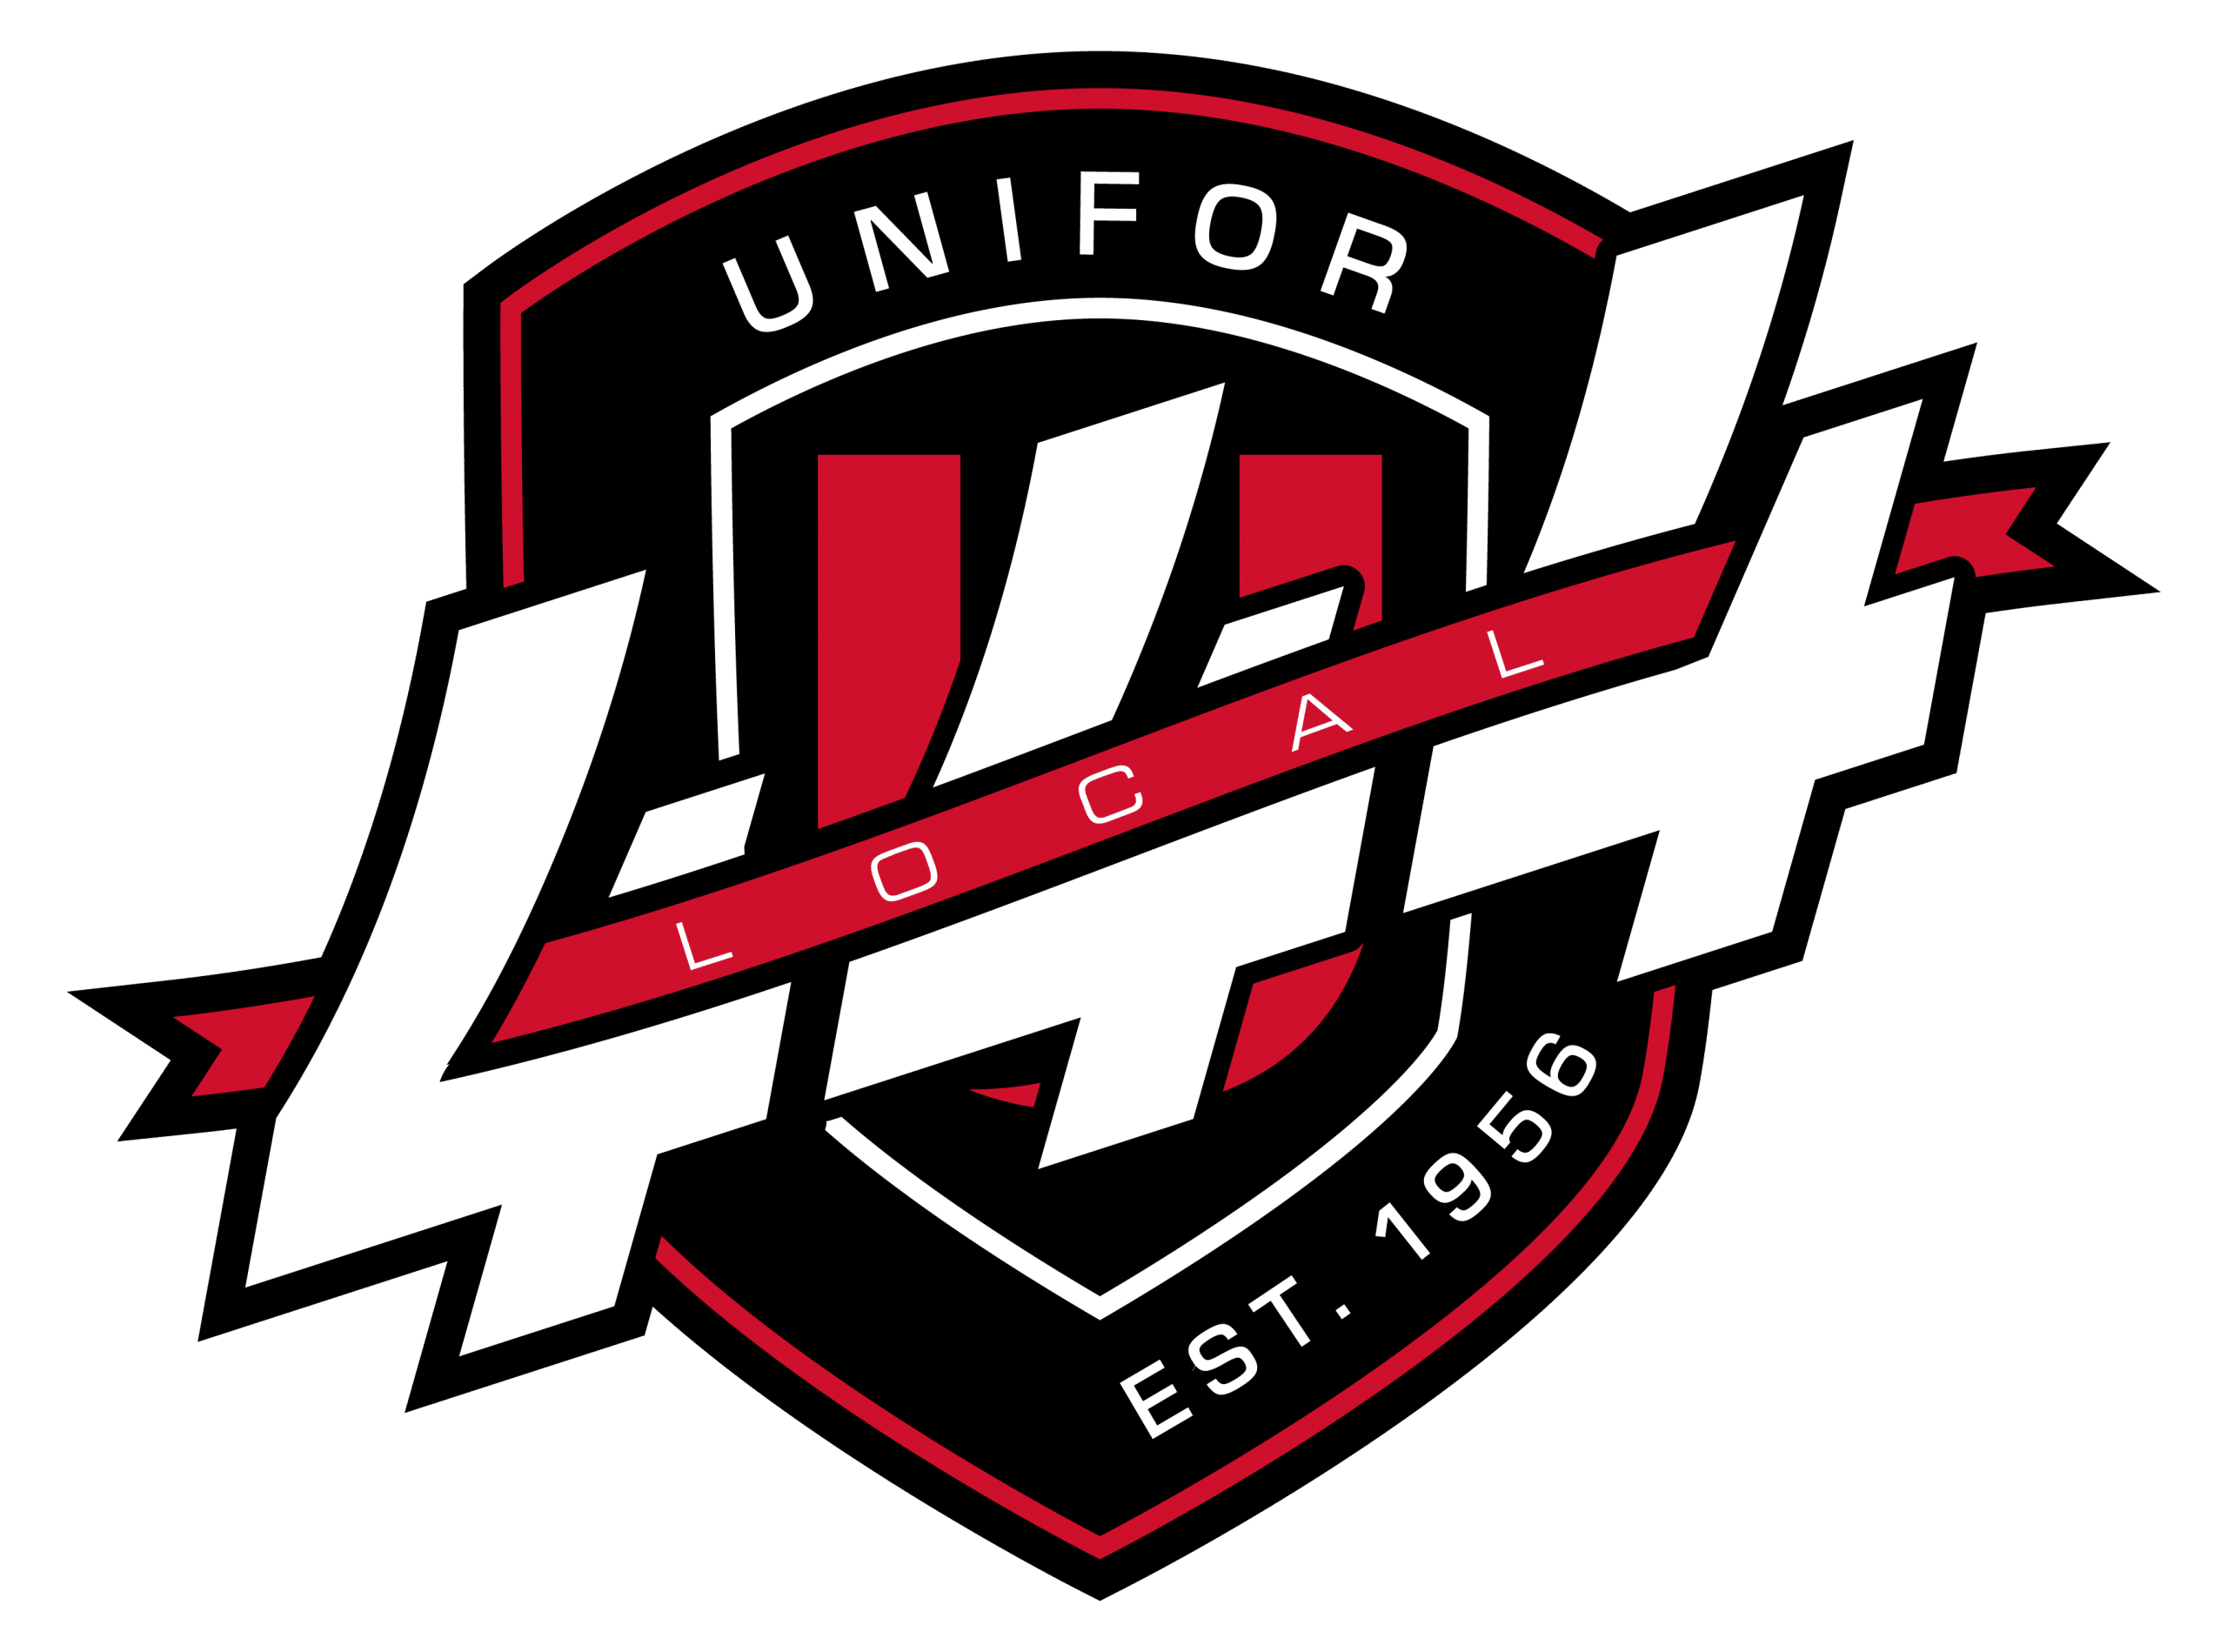 Unifor Local 444 logo